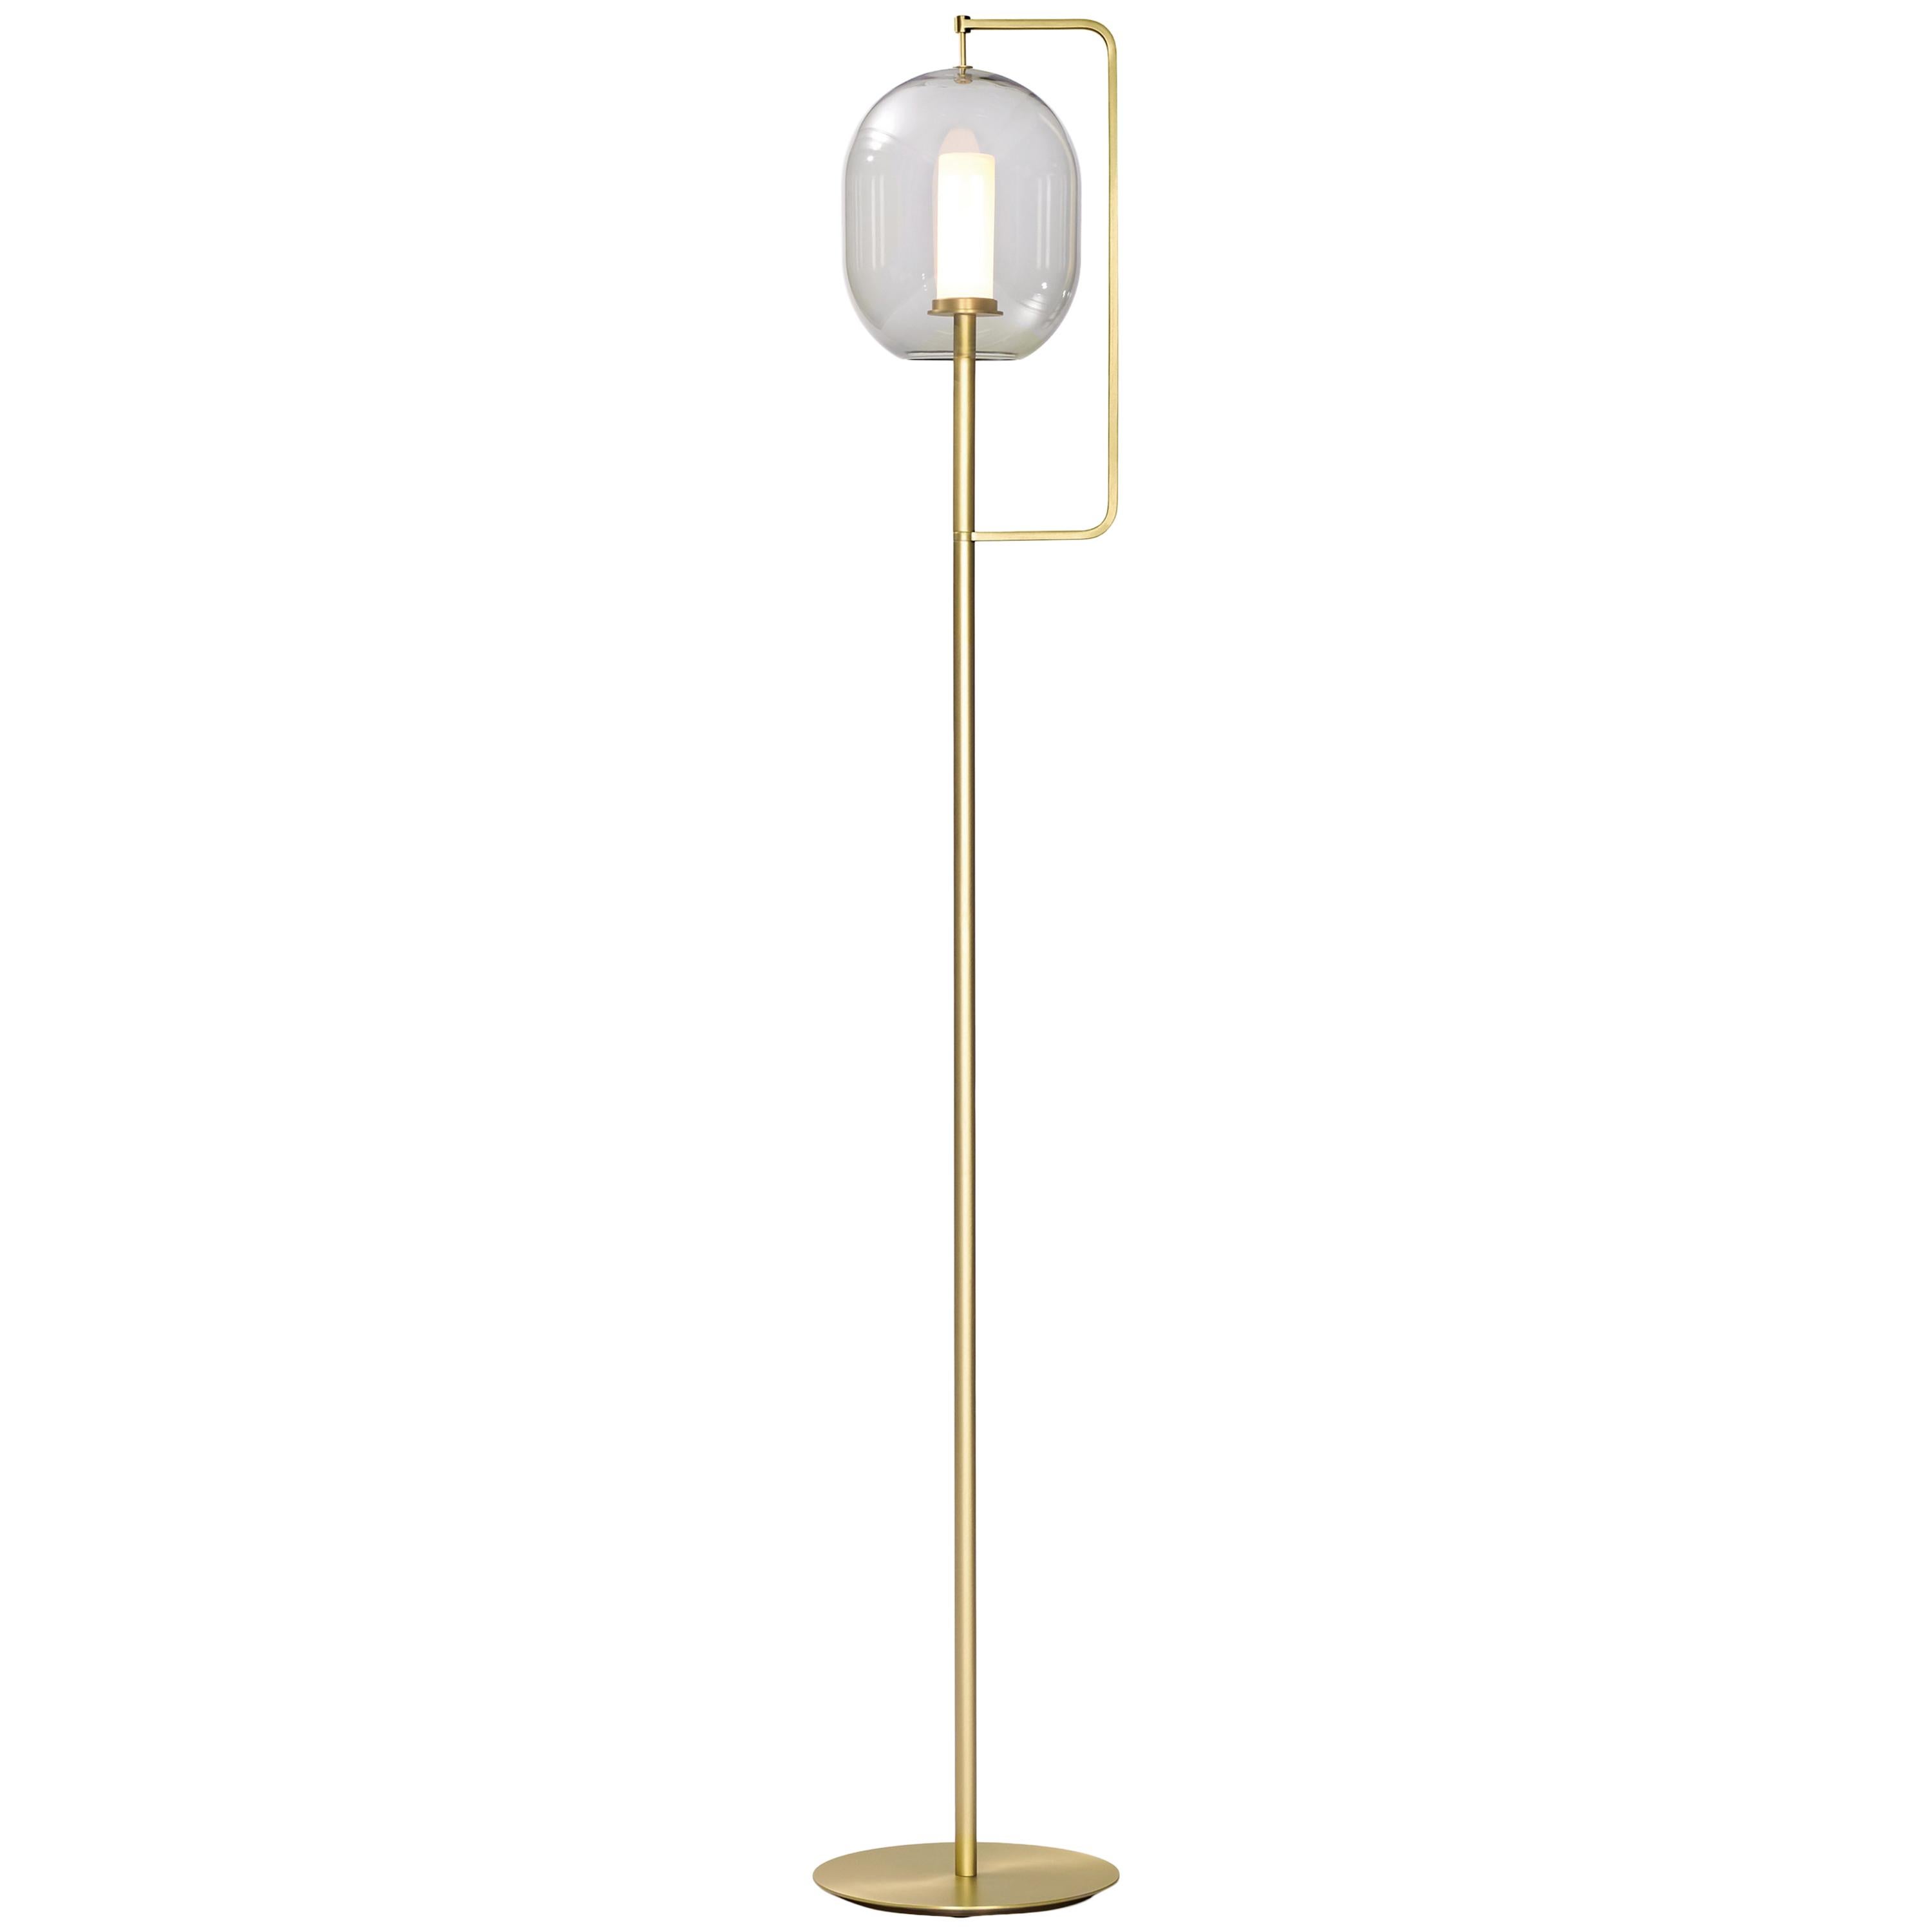 ClassiCon Lantern Light Tall Floor Lamp in Brass by Neri&Hu